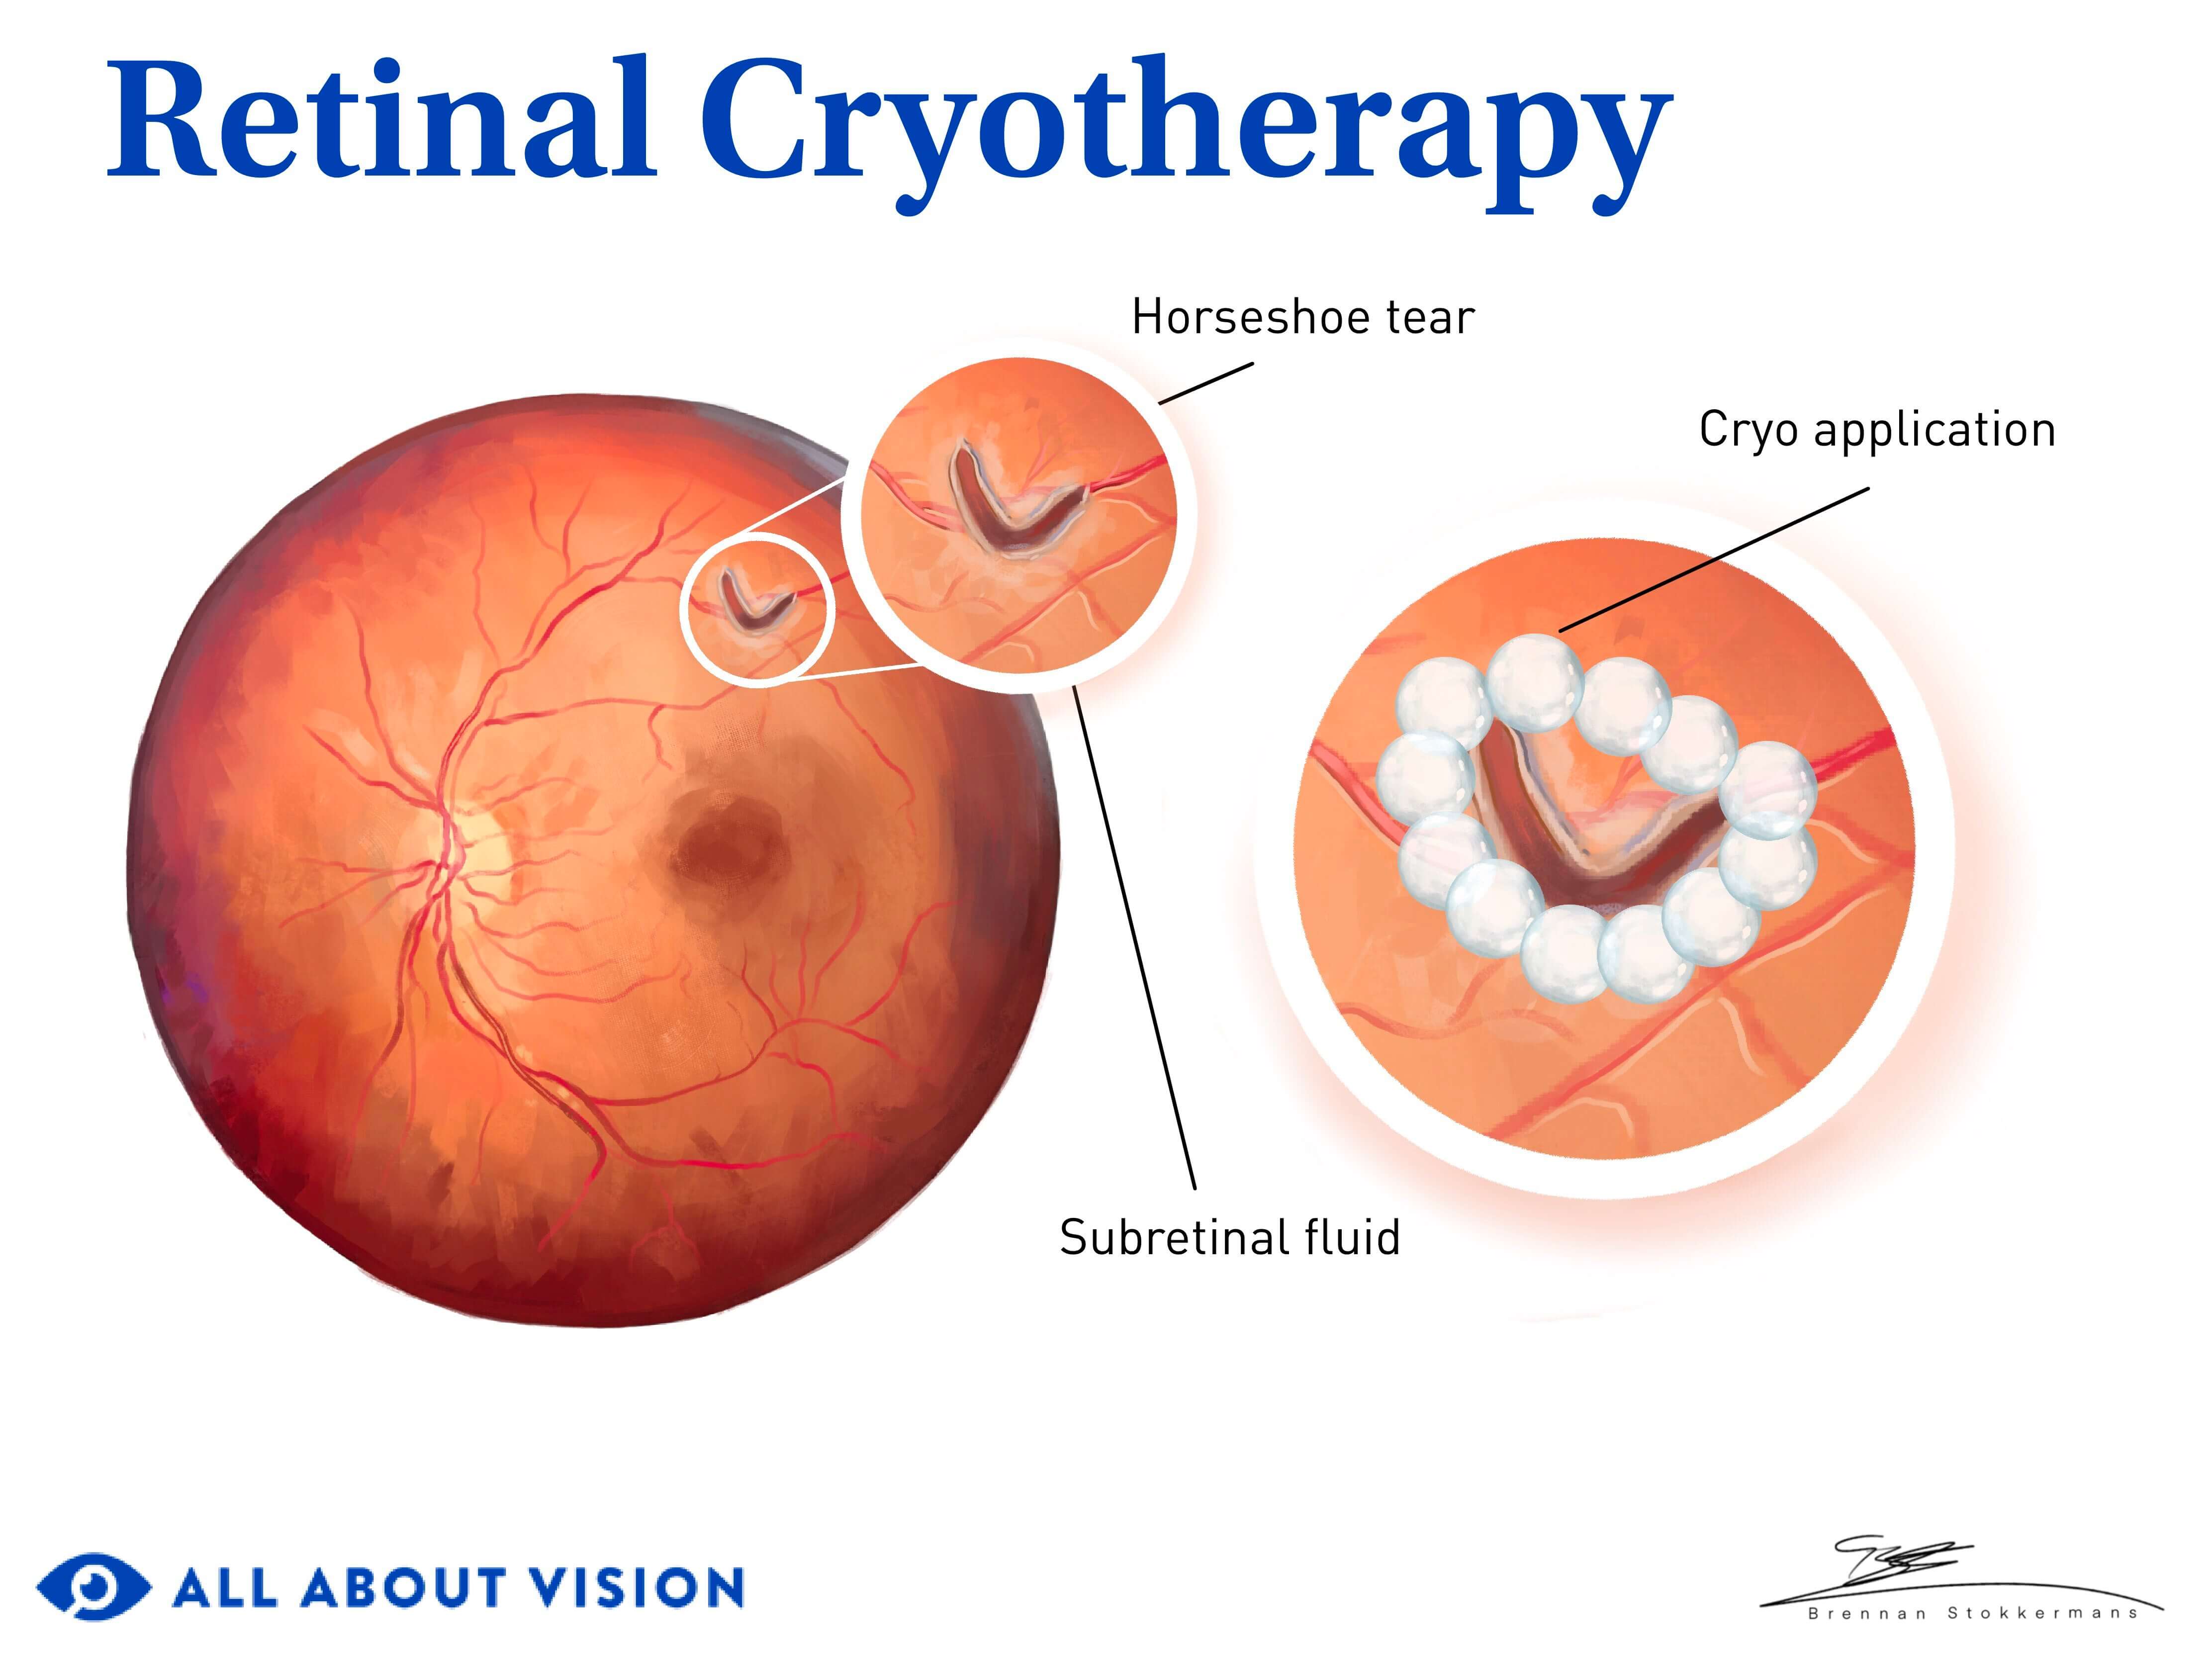 Illustration of retinal cryotherapy procedure.